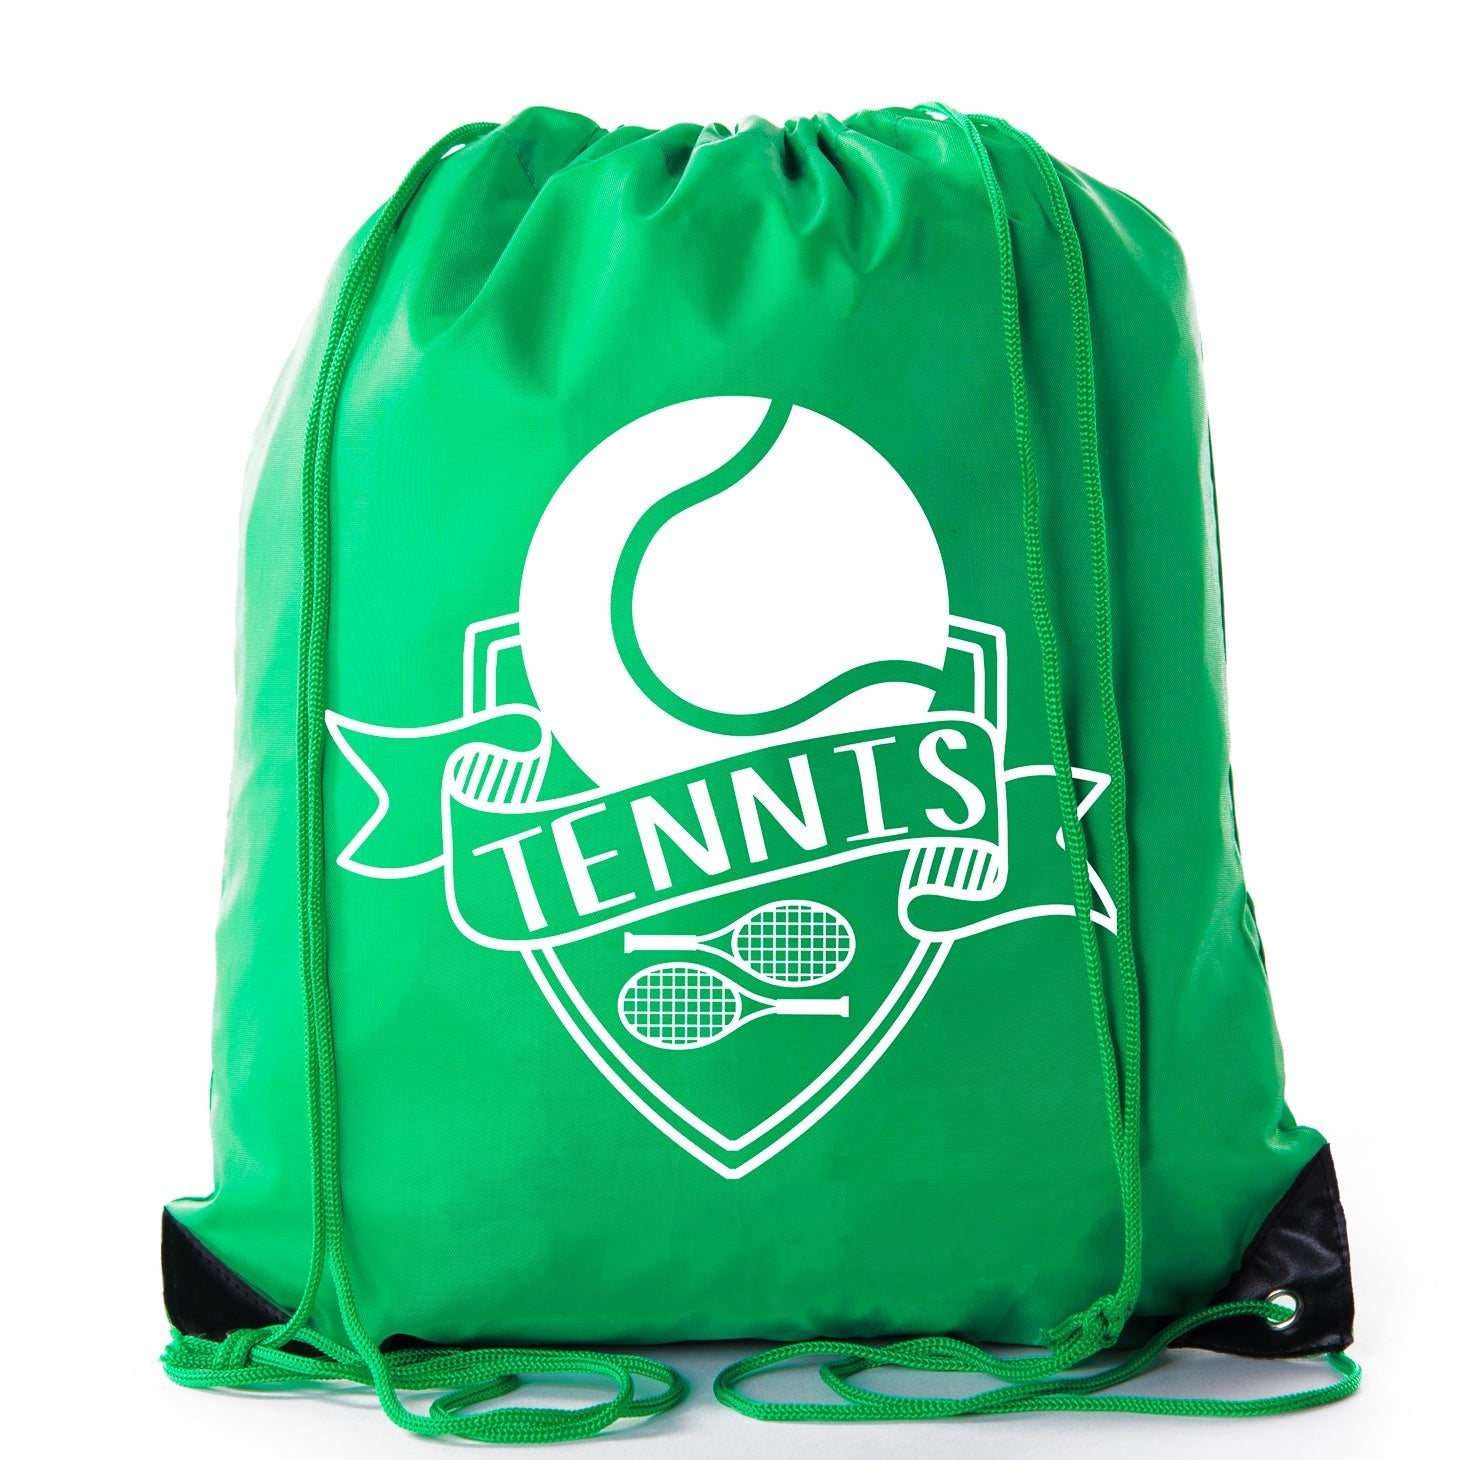 Tennis Club Polyester Drawstring Bag - Mato & Hash